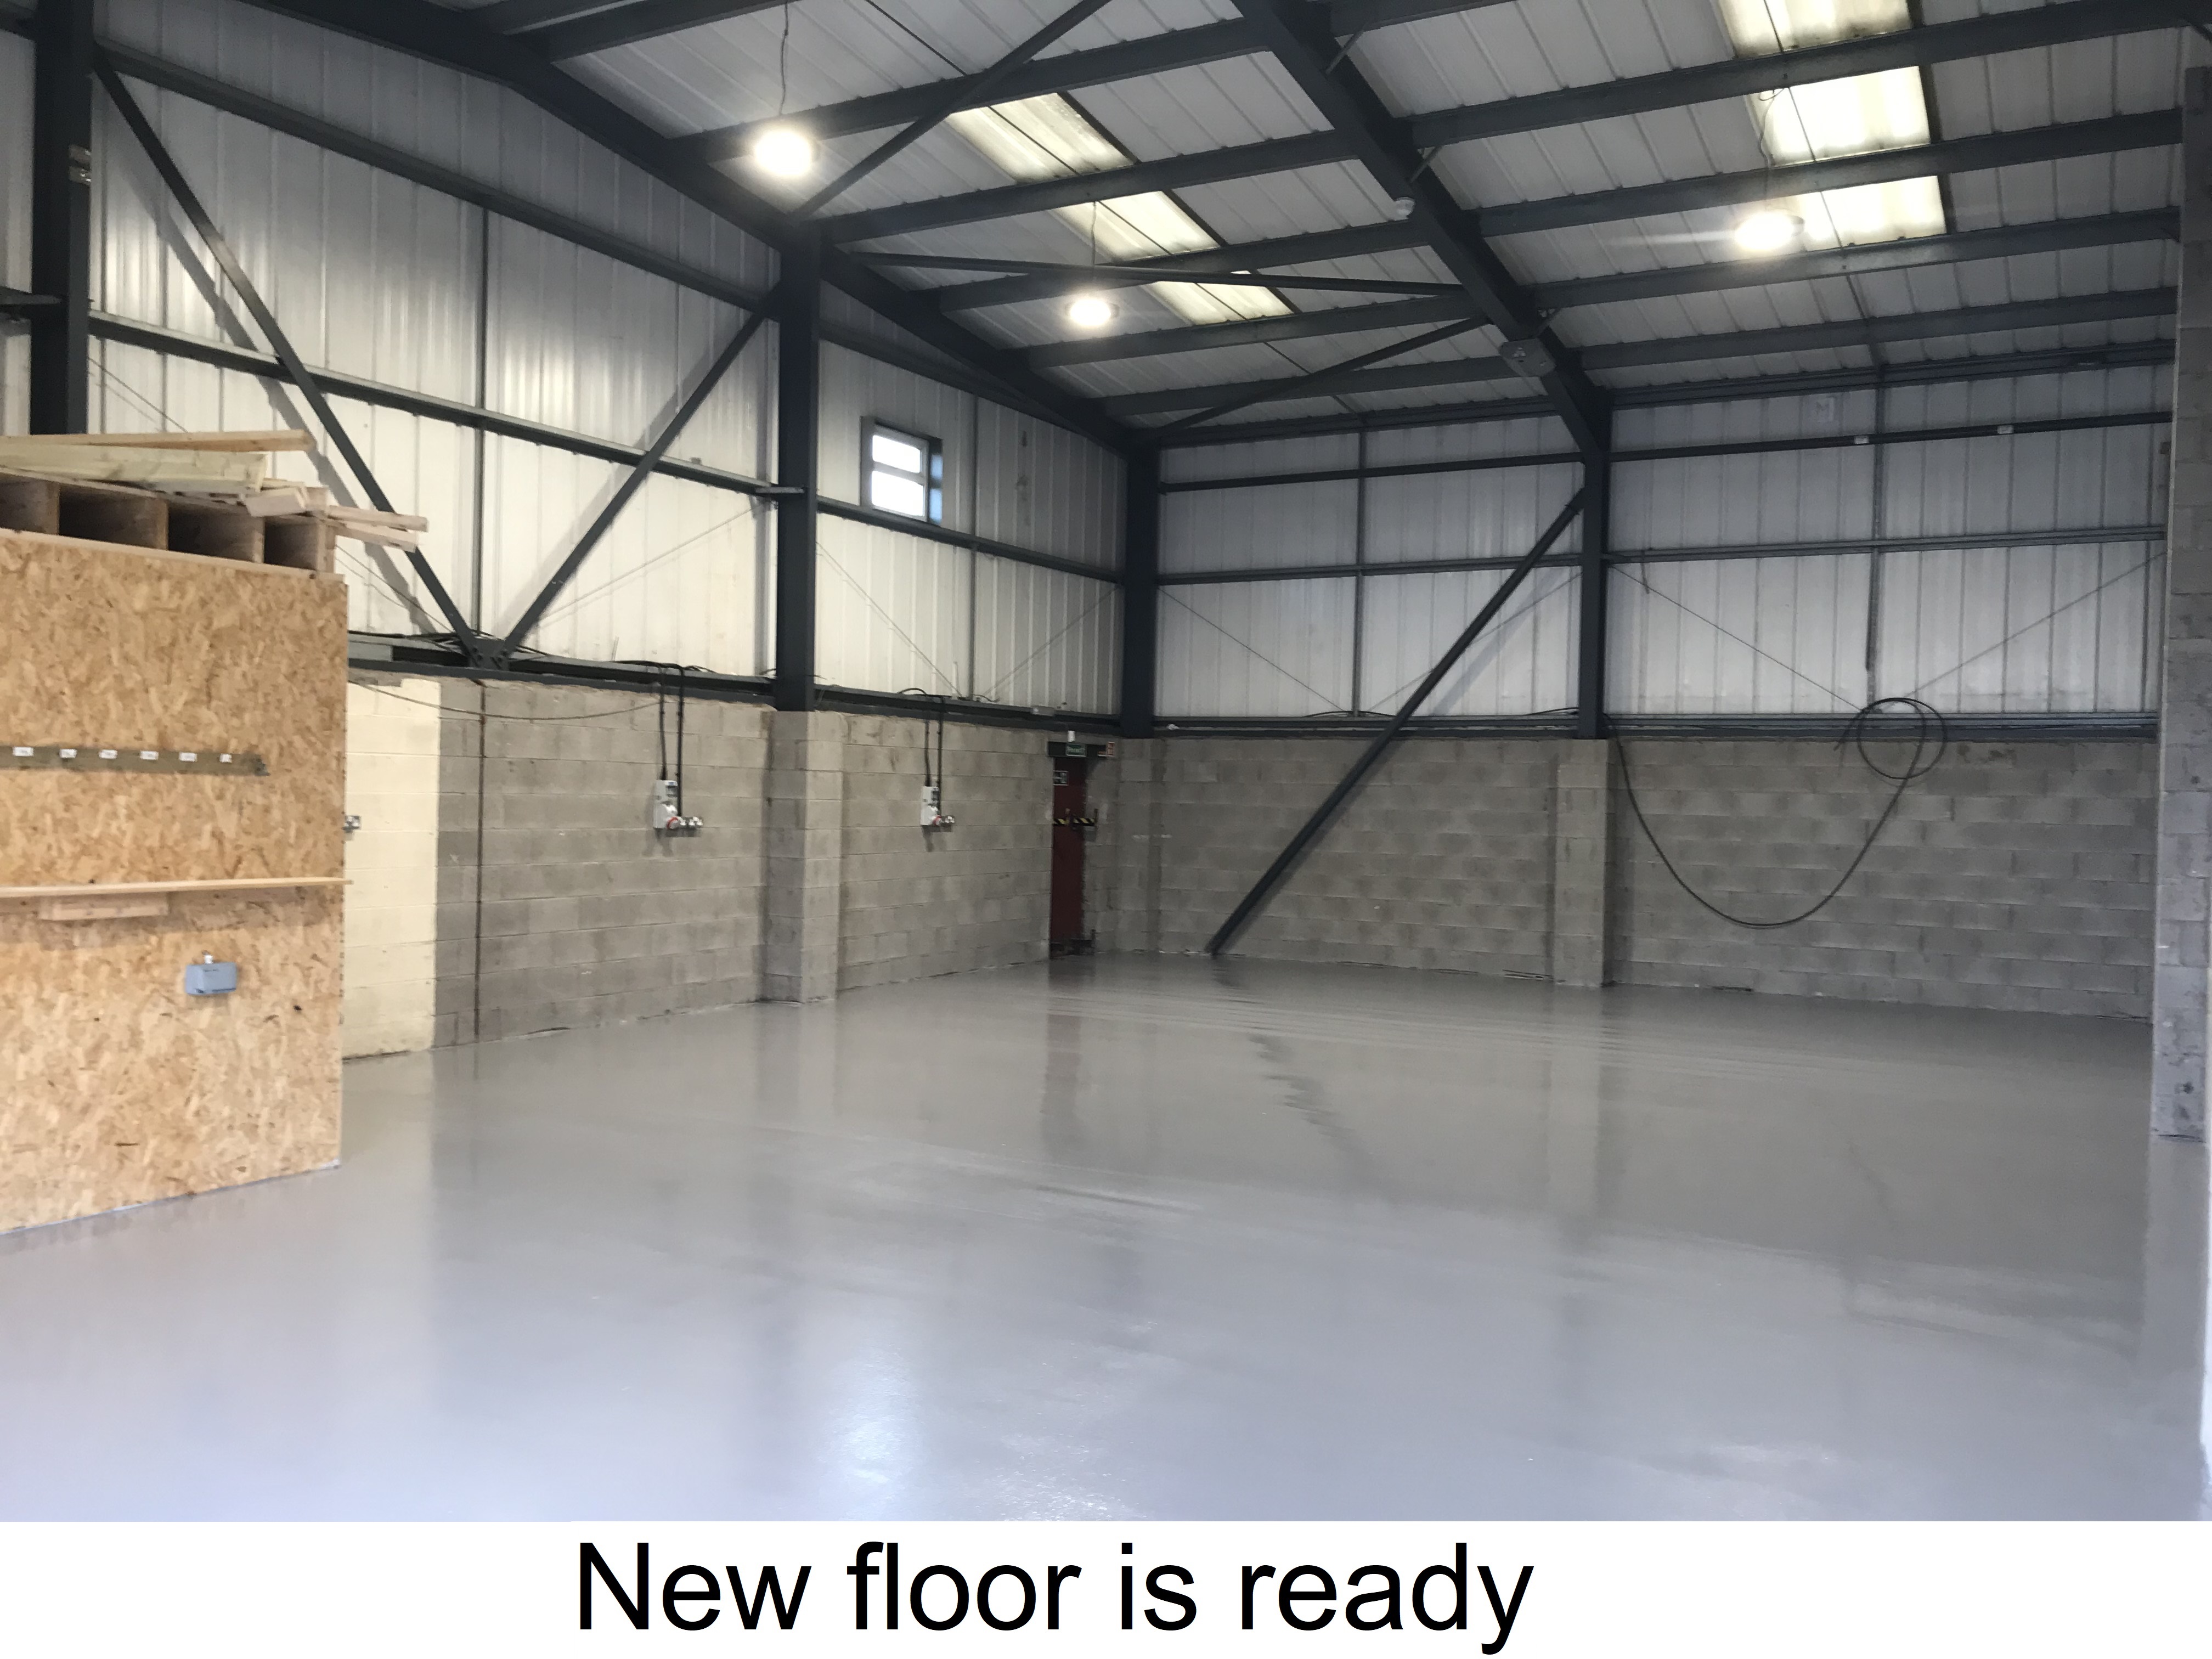 https://0201.nccdn.net/1_2/000/000/0f9/fce/8.-new-floor-is-ready.jpg